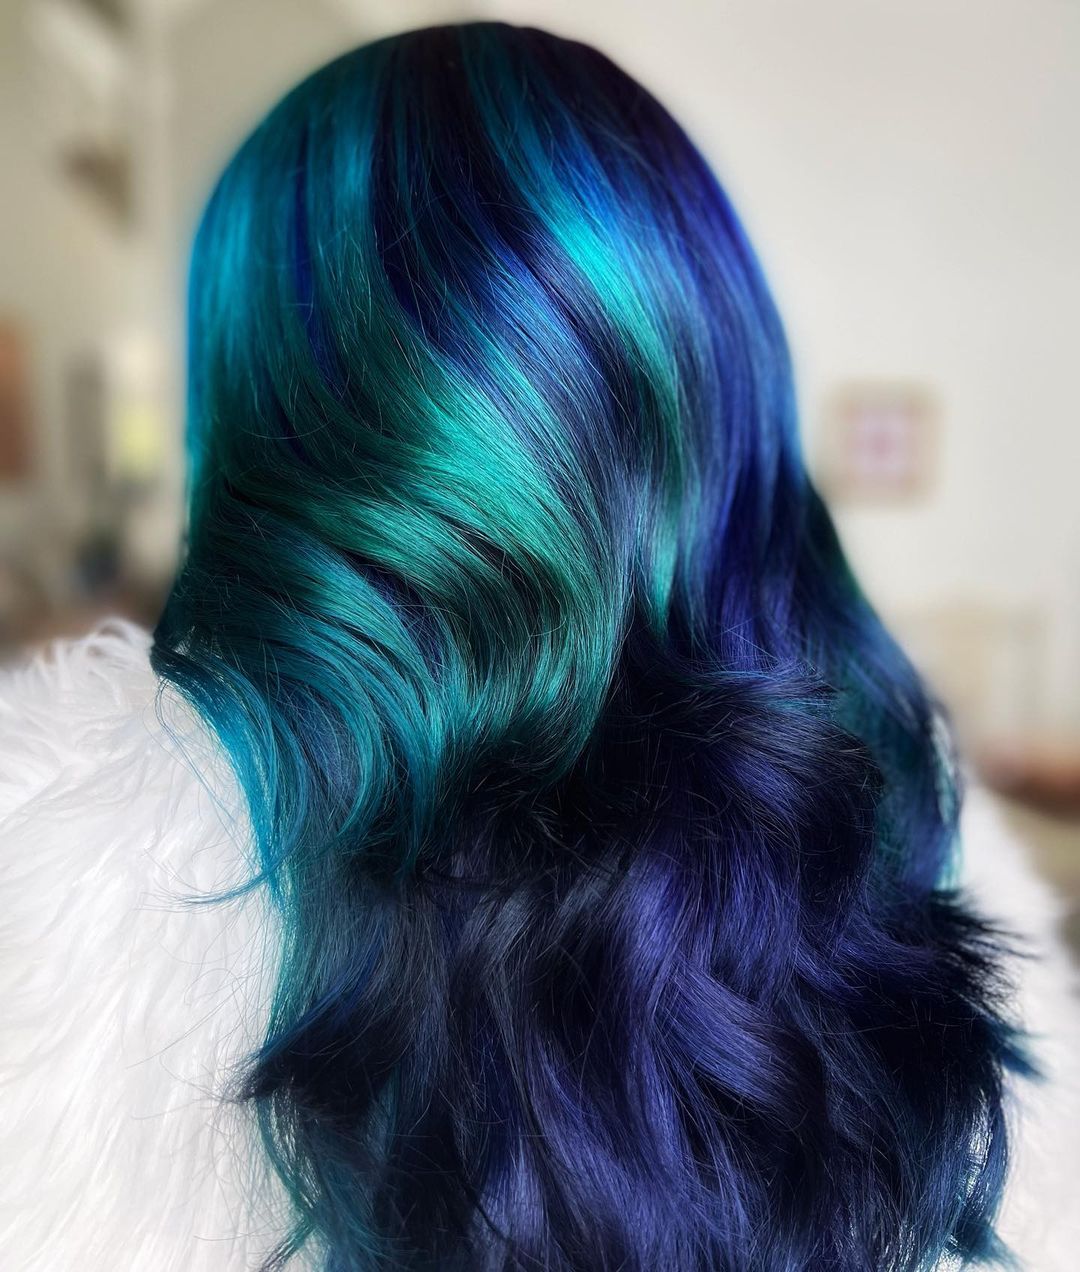 Green and Blue Highlights on Dark Hair